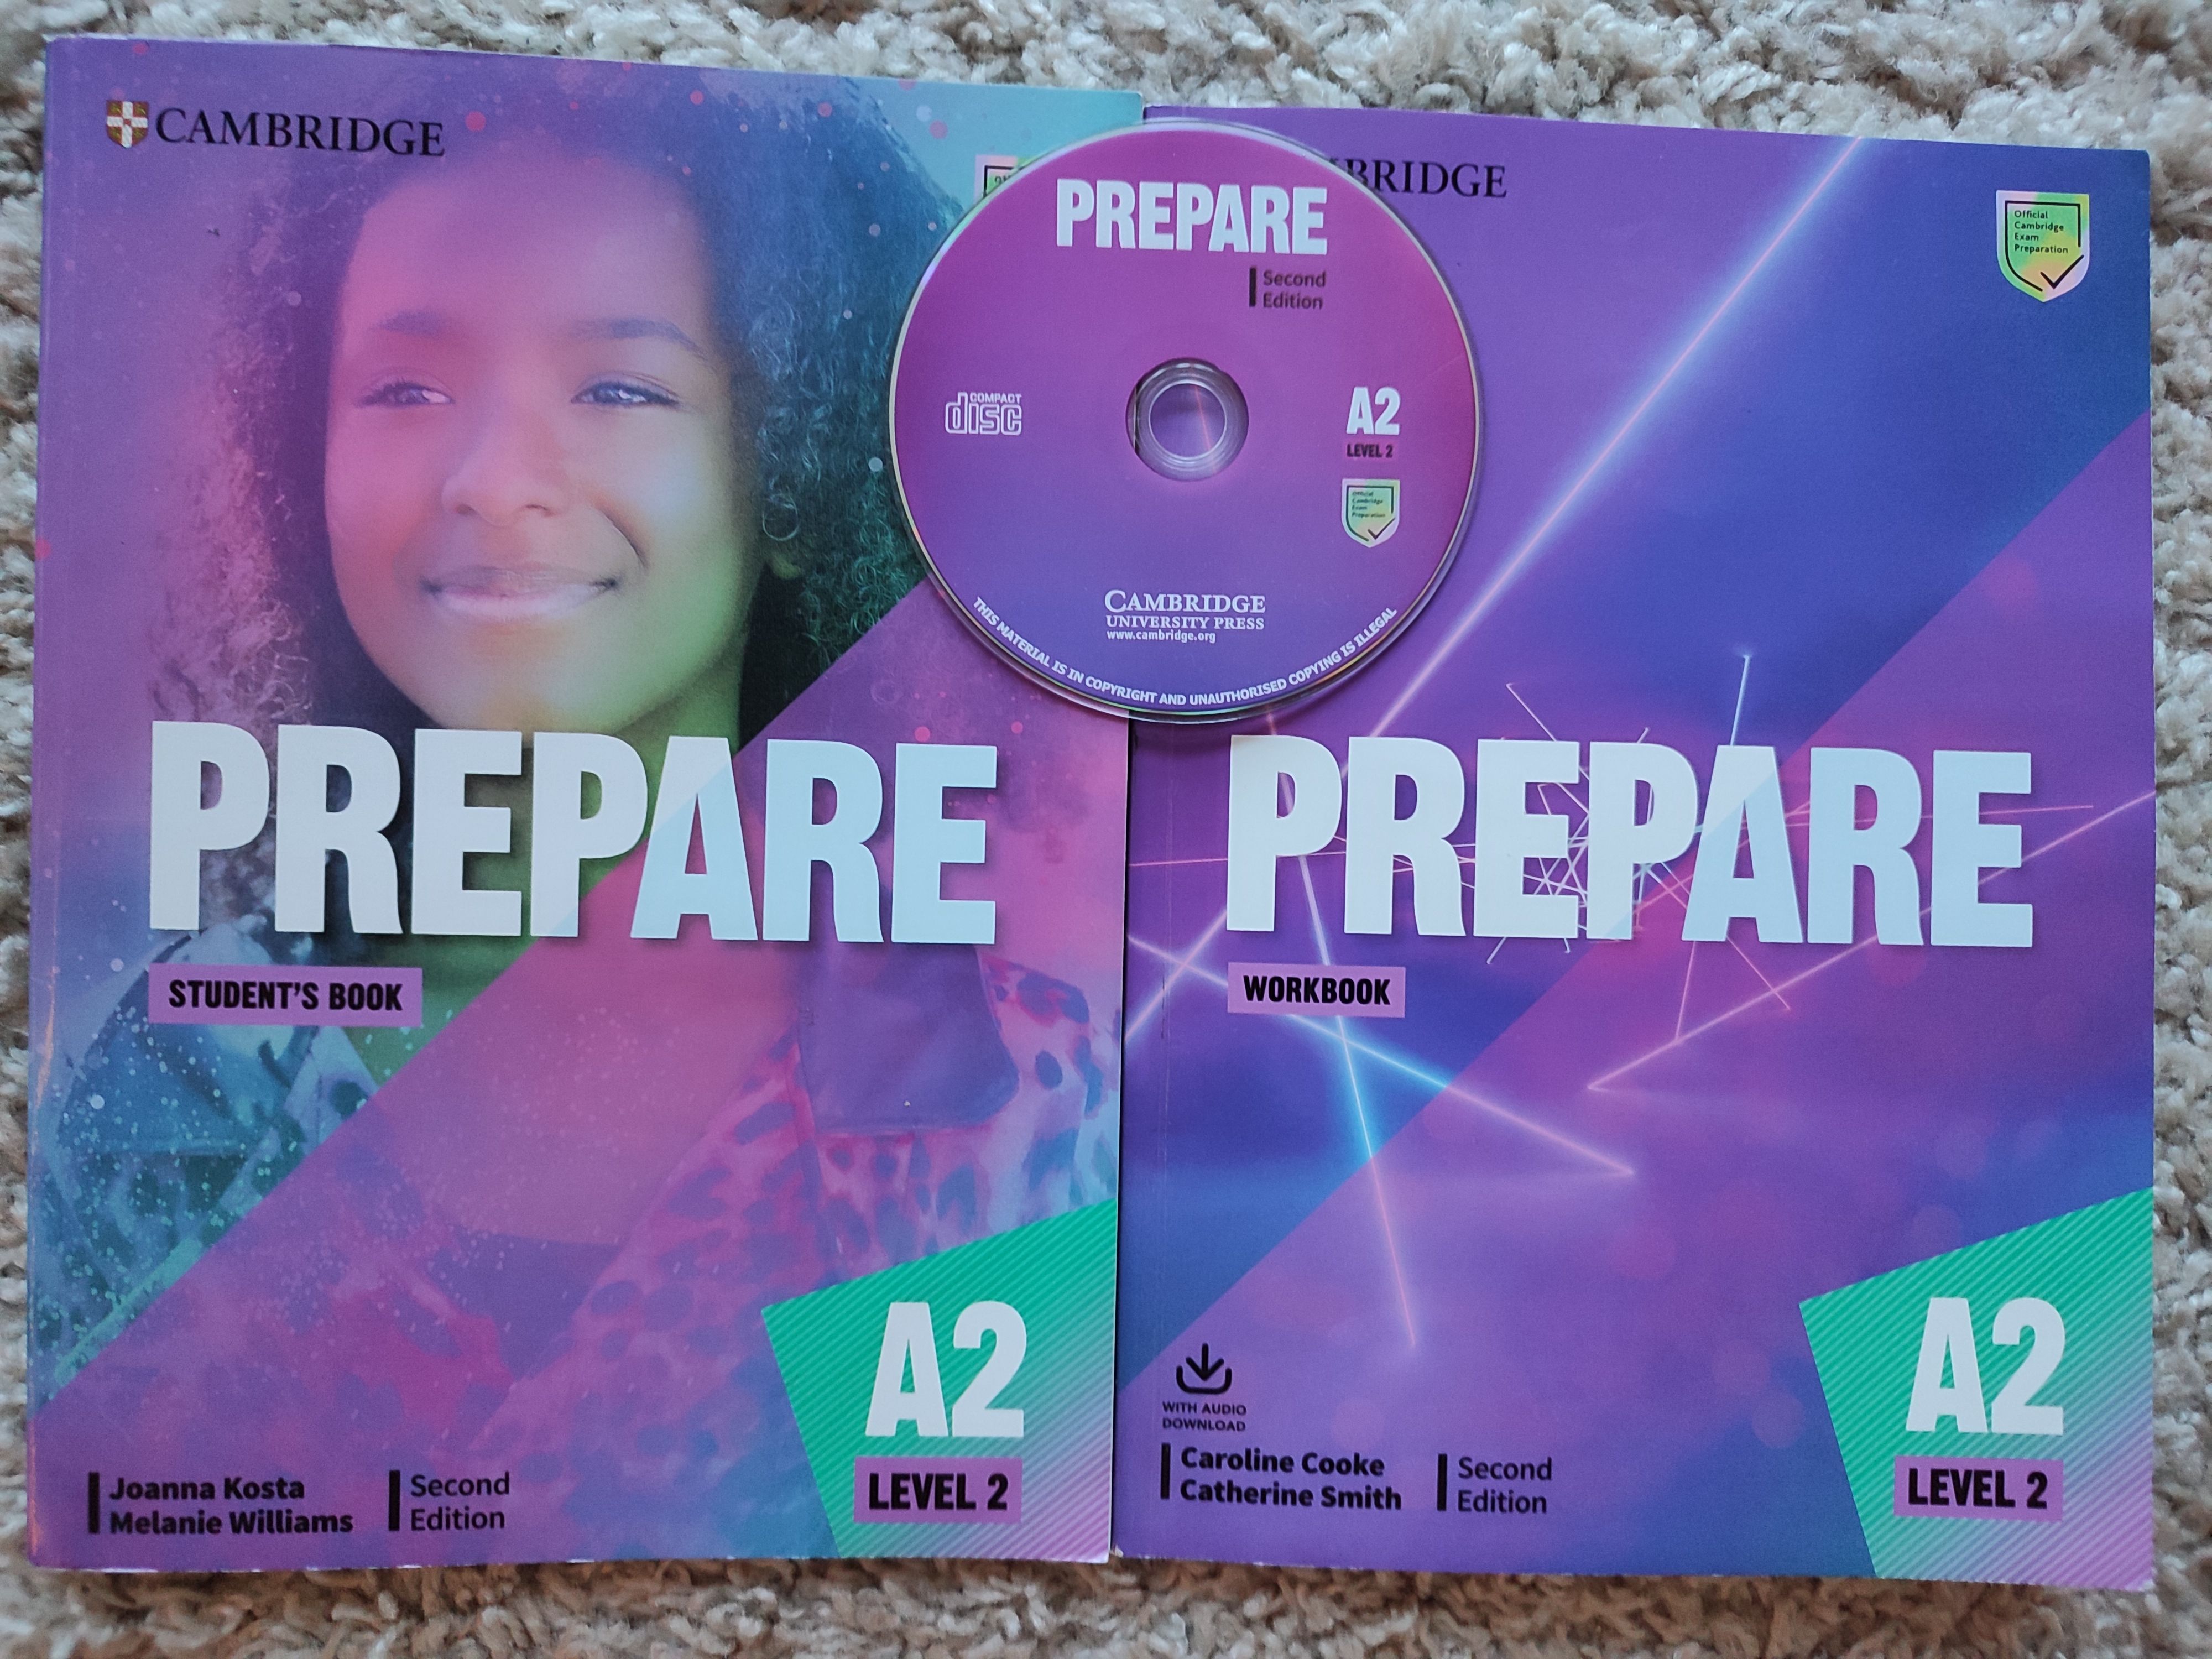 Prepare 2 students book. Preape 2учебник. Учебник prepare 2. Prepare second Edition. 18:10 4 Prepare second Edition Level 6 2 из 2.